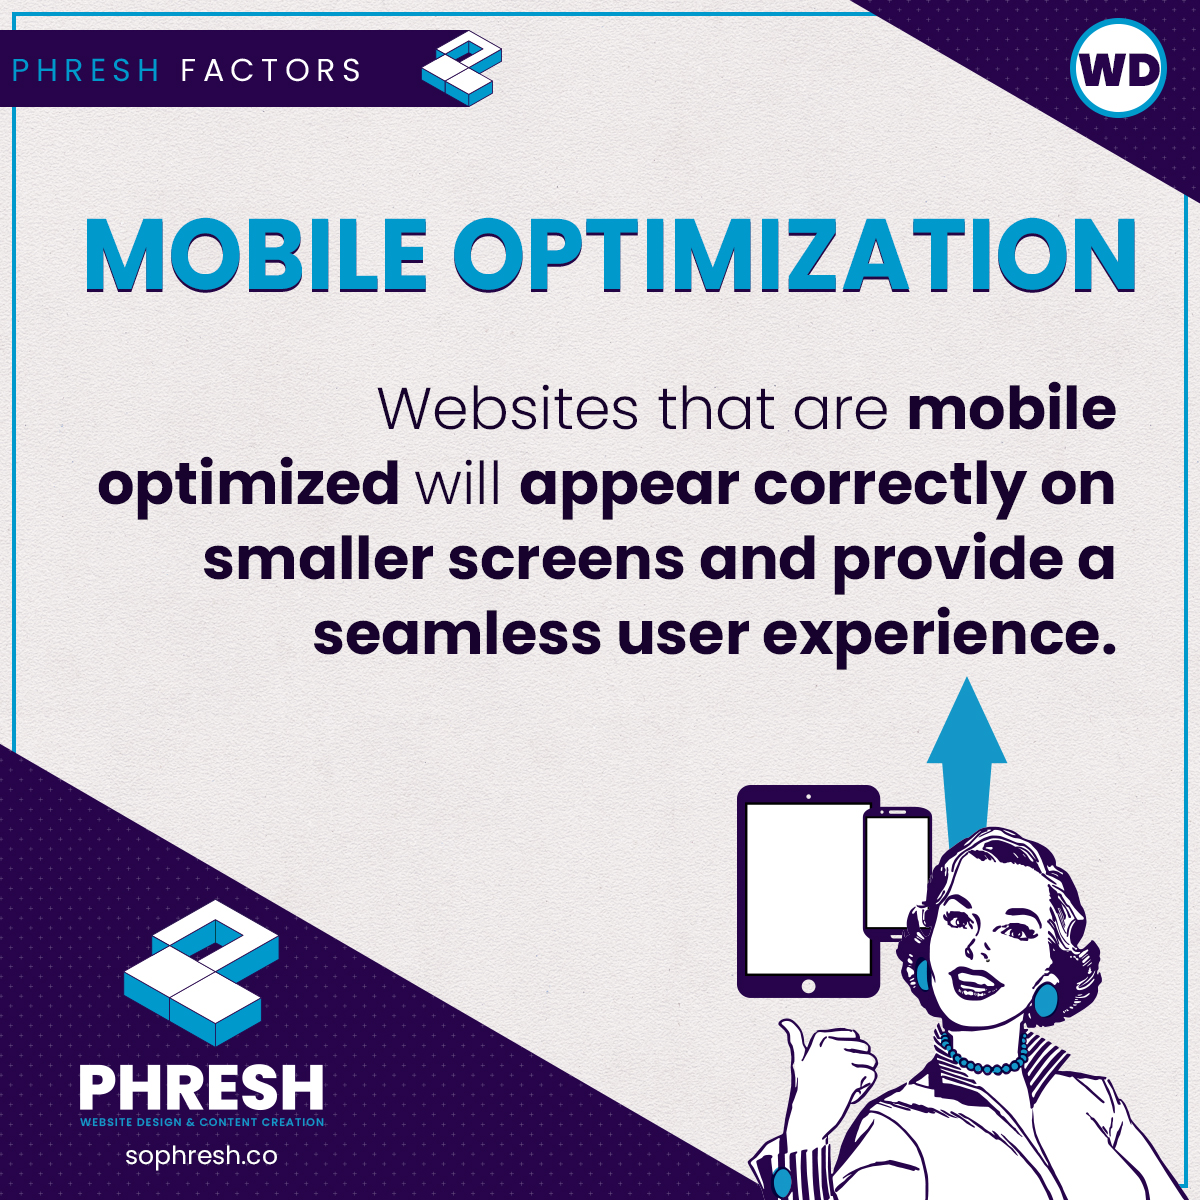 WD Mobile Optimization